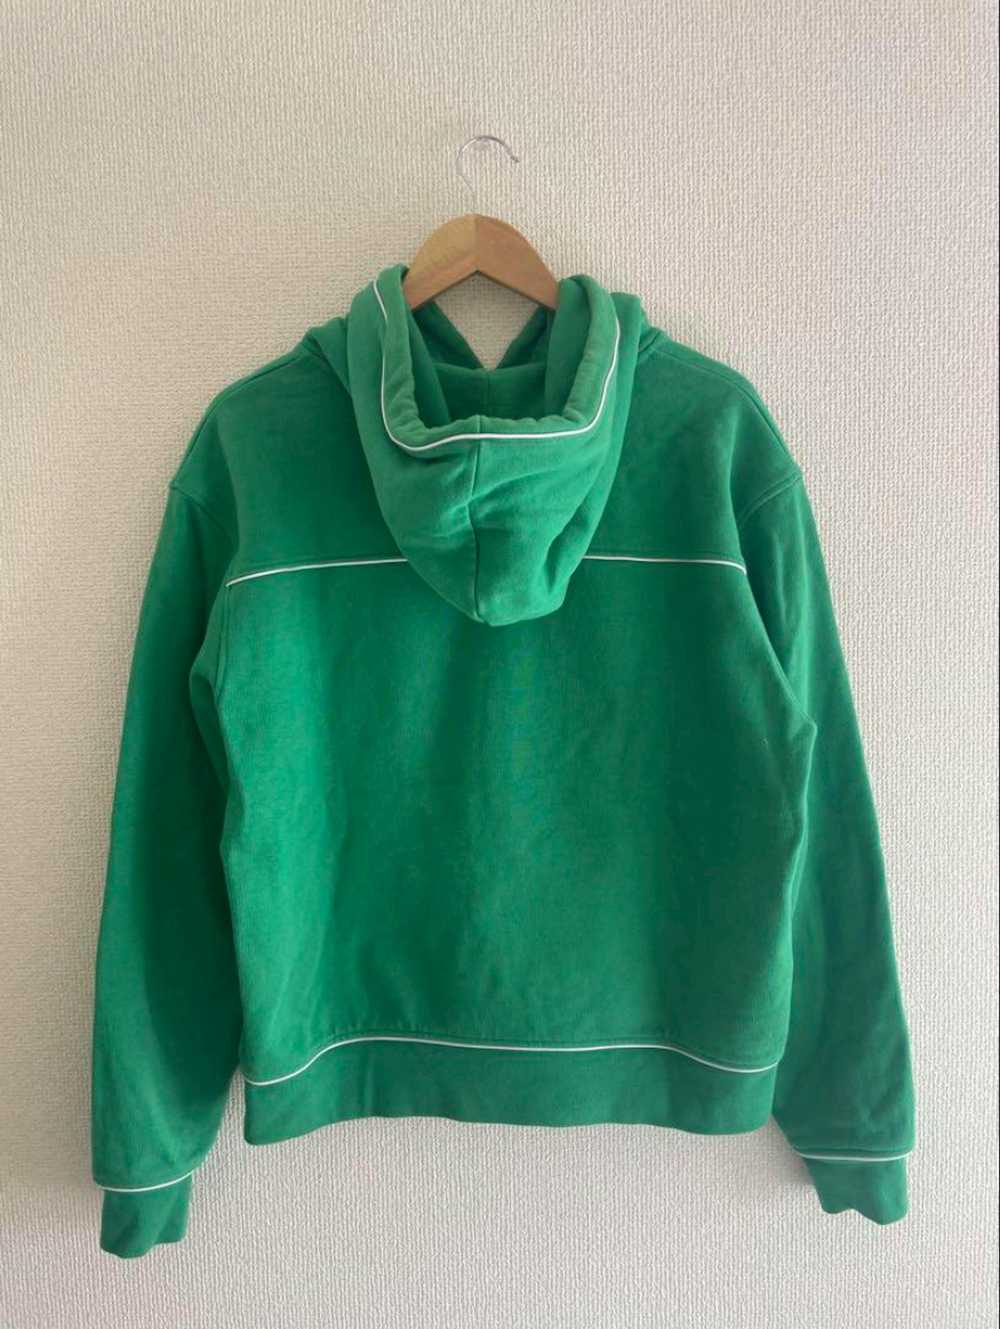 Jacquemus Le Sweatshirt Vague in Green - image 2